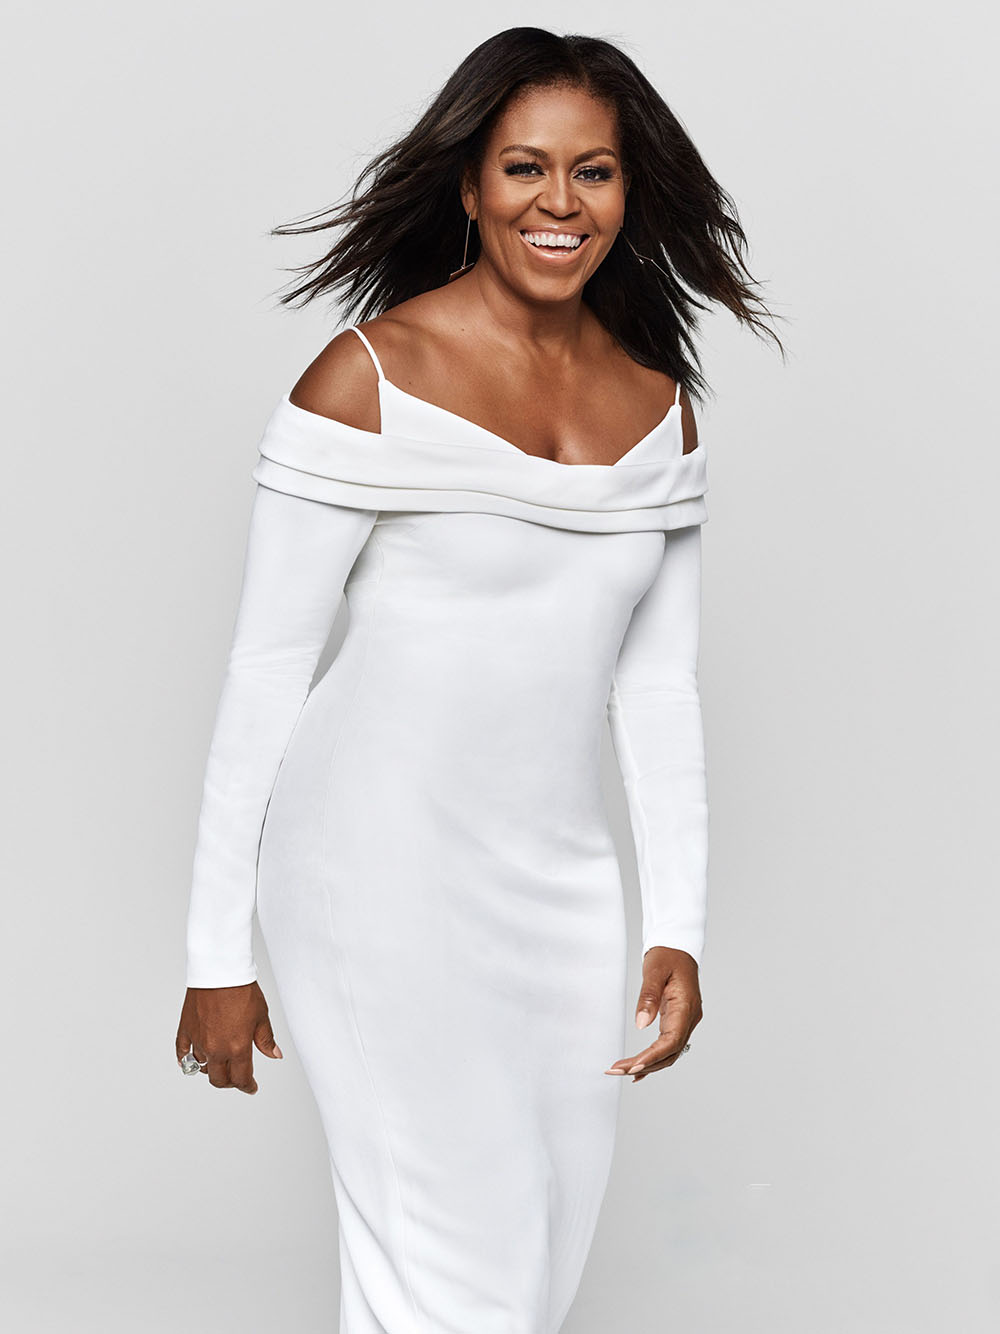 Michelle Obama covers Elle US December 2018 by Miller Mobley